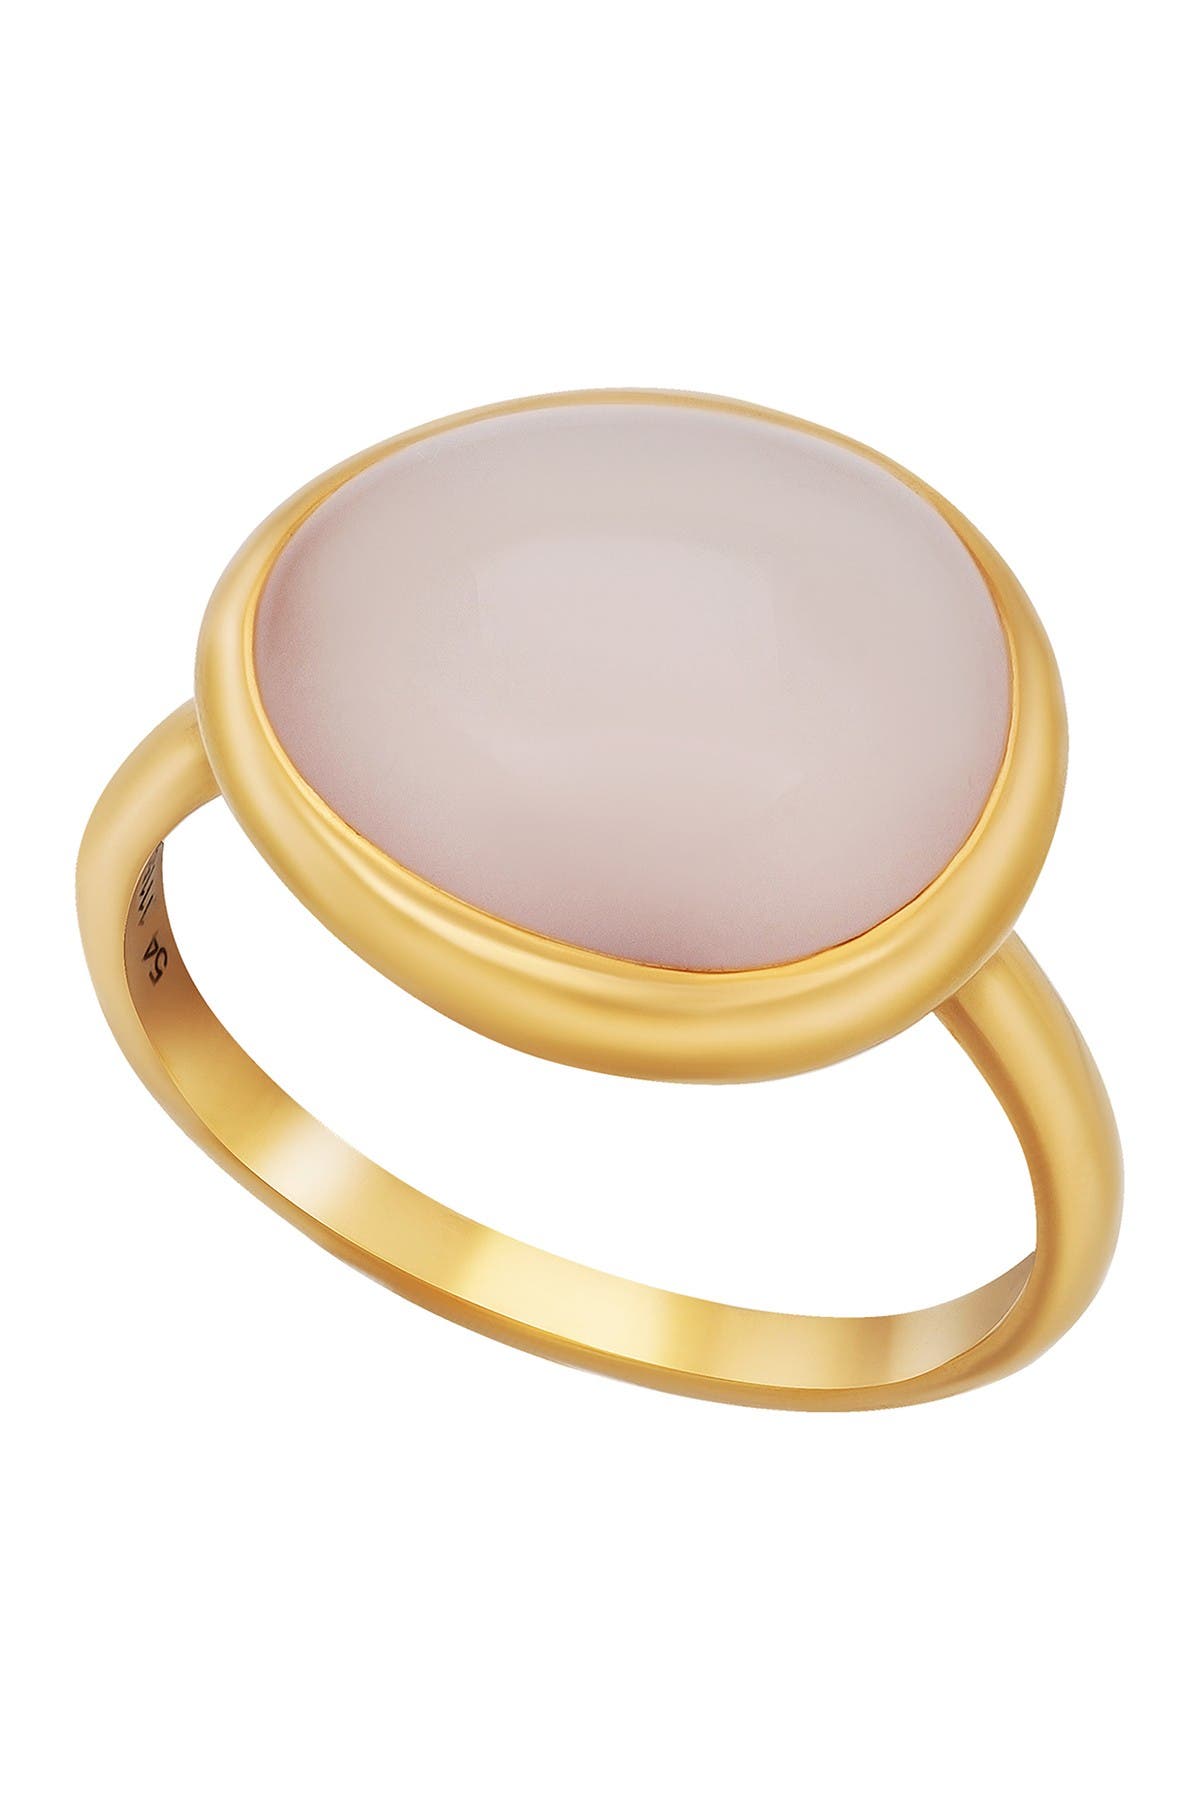 Fred Of Paris Rose Gold Rose Quartz Statement Ring In Light Pink